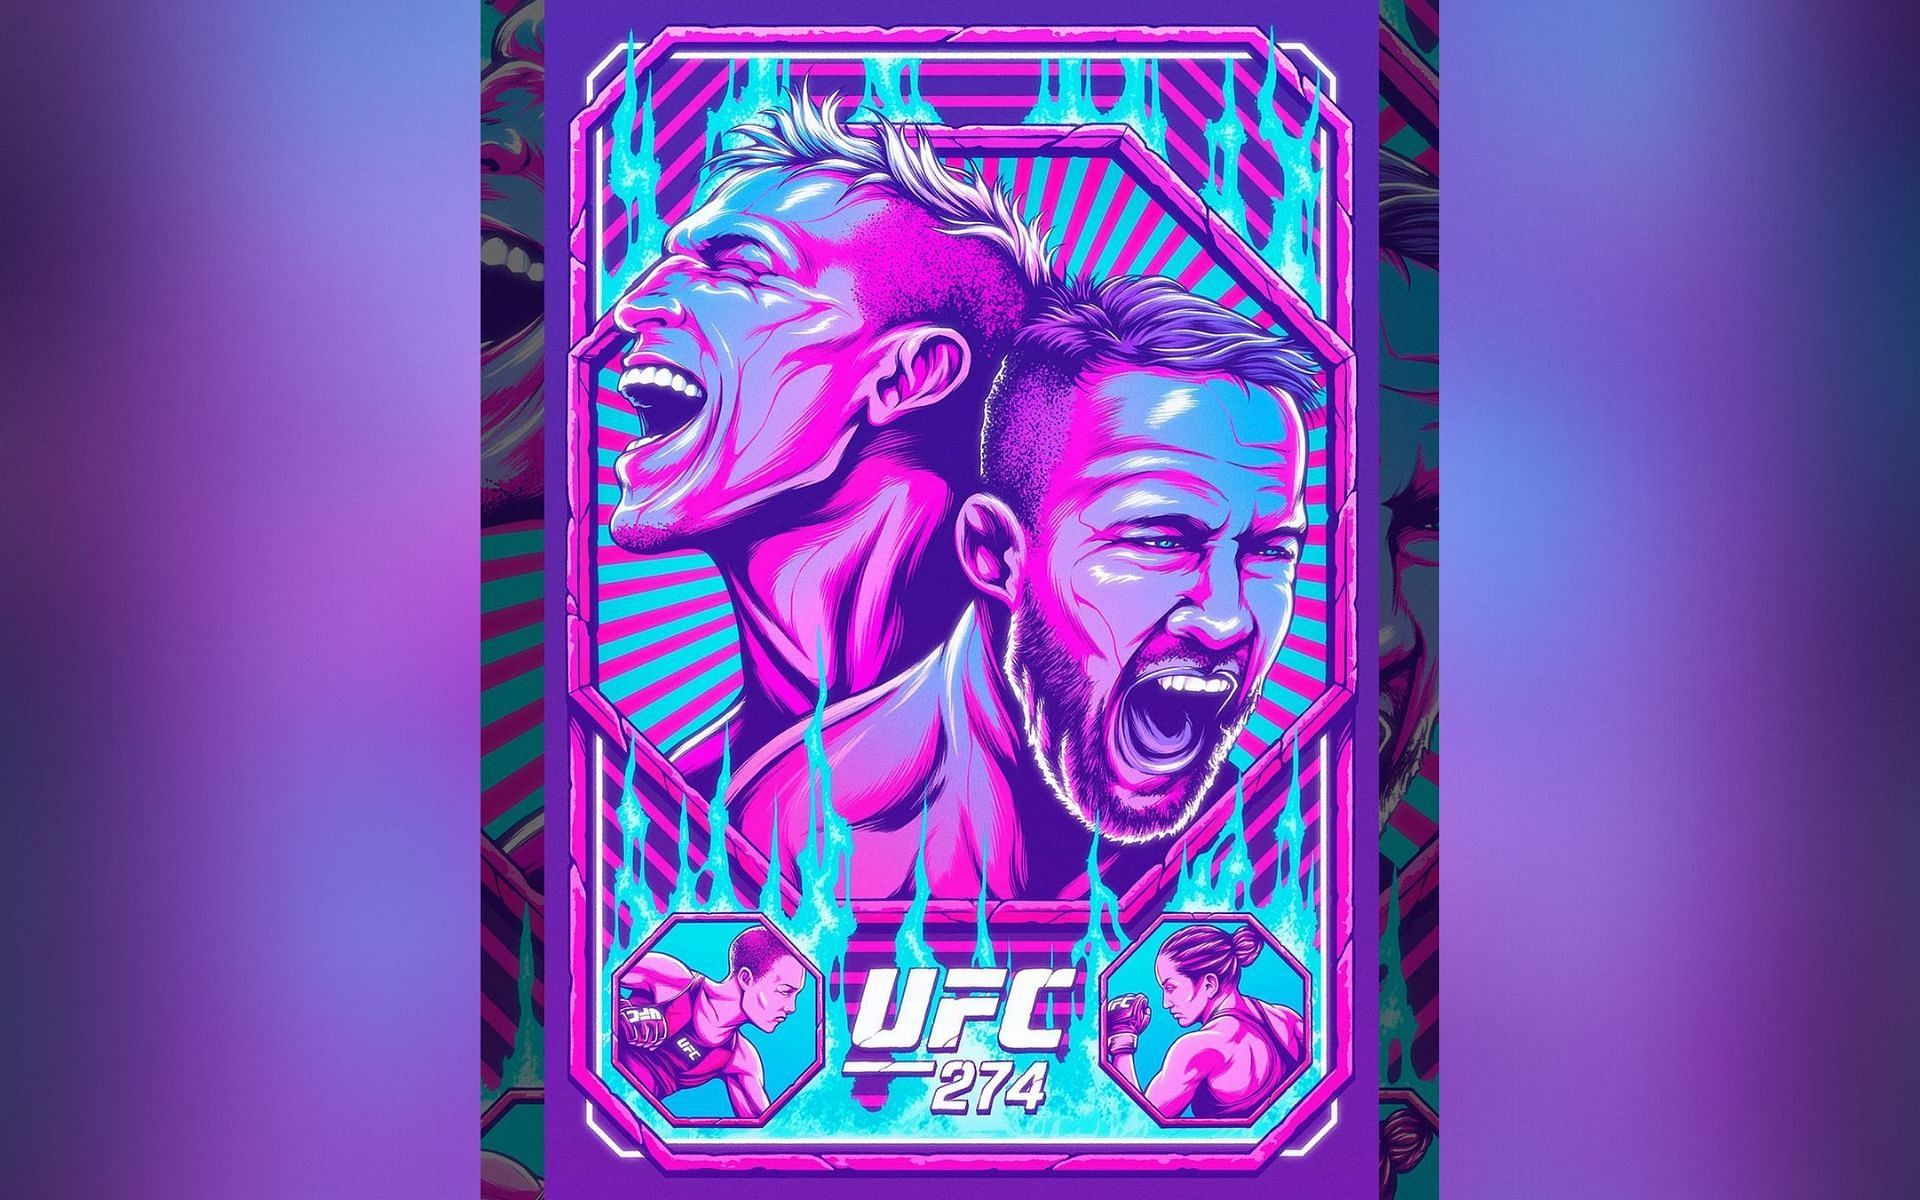 UFC 274 artist series poster [Image via @ufc on Instagram]